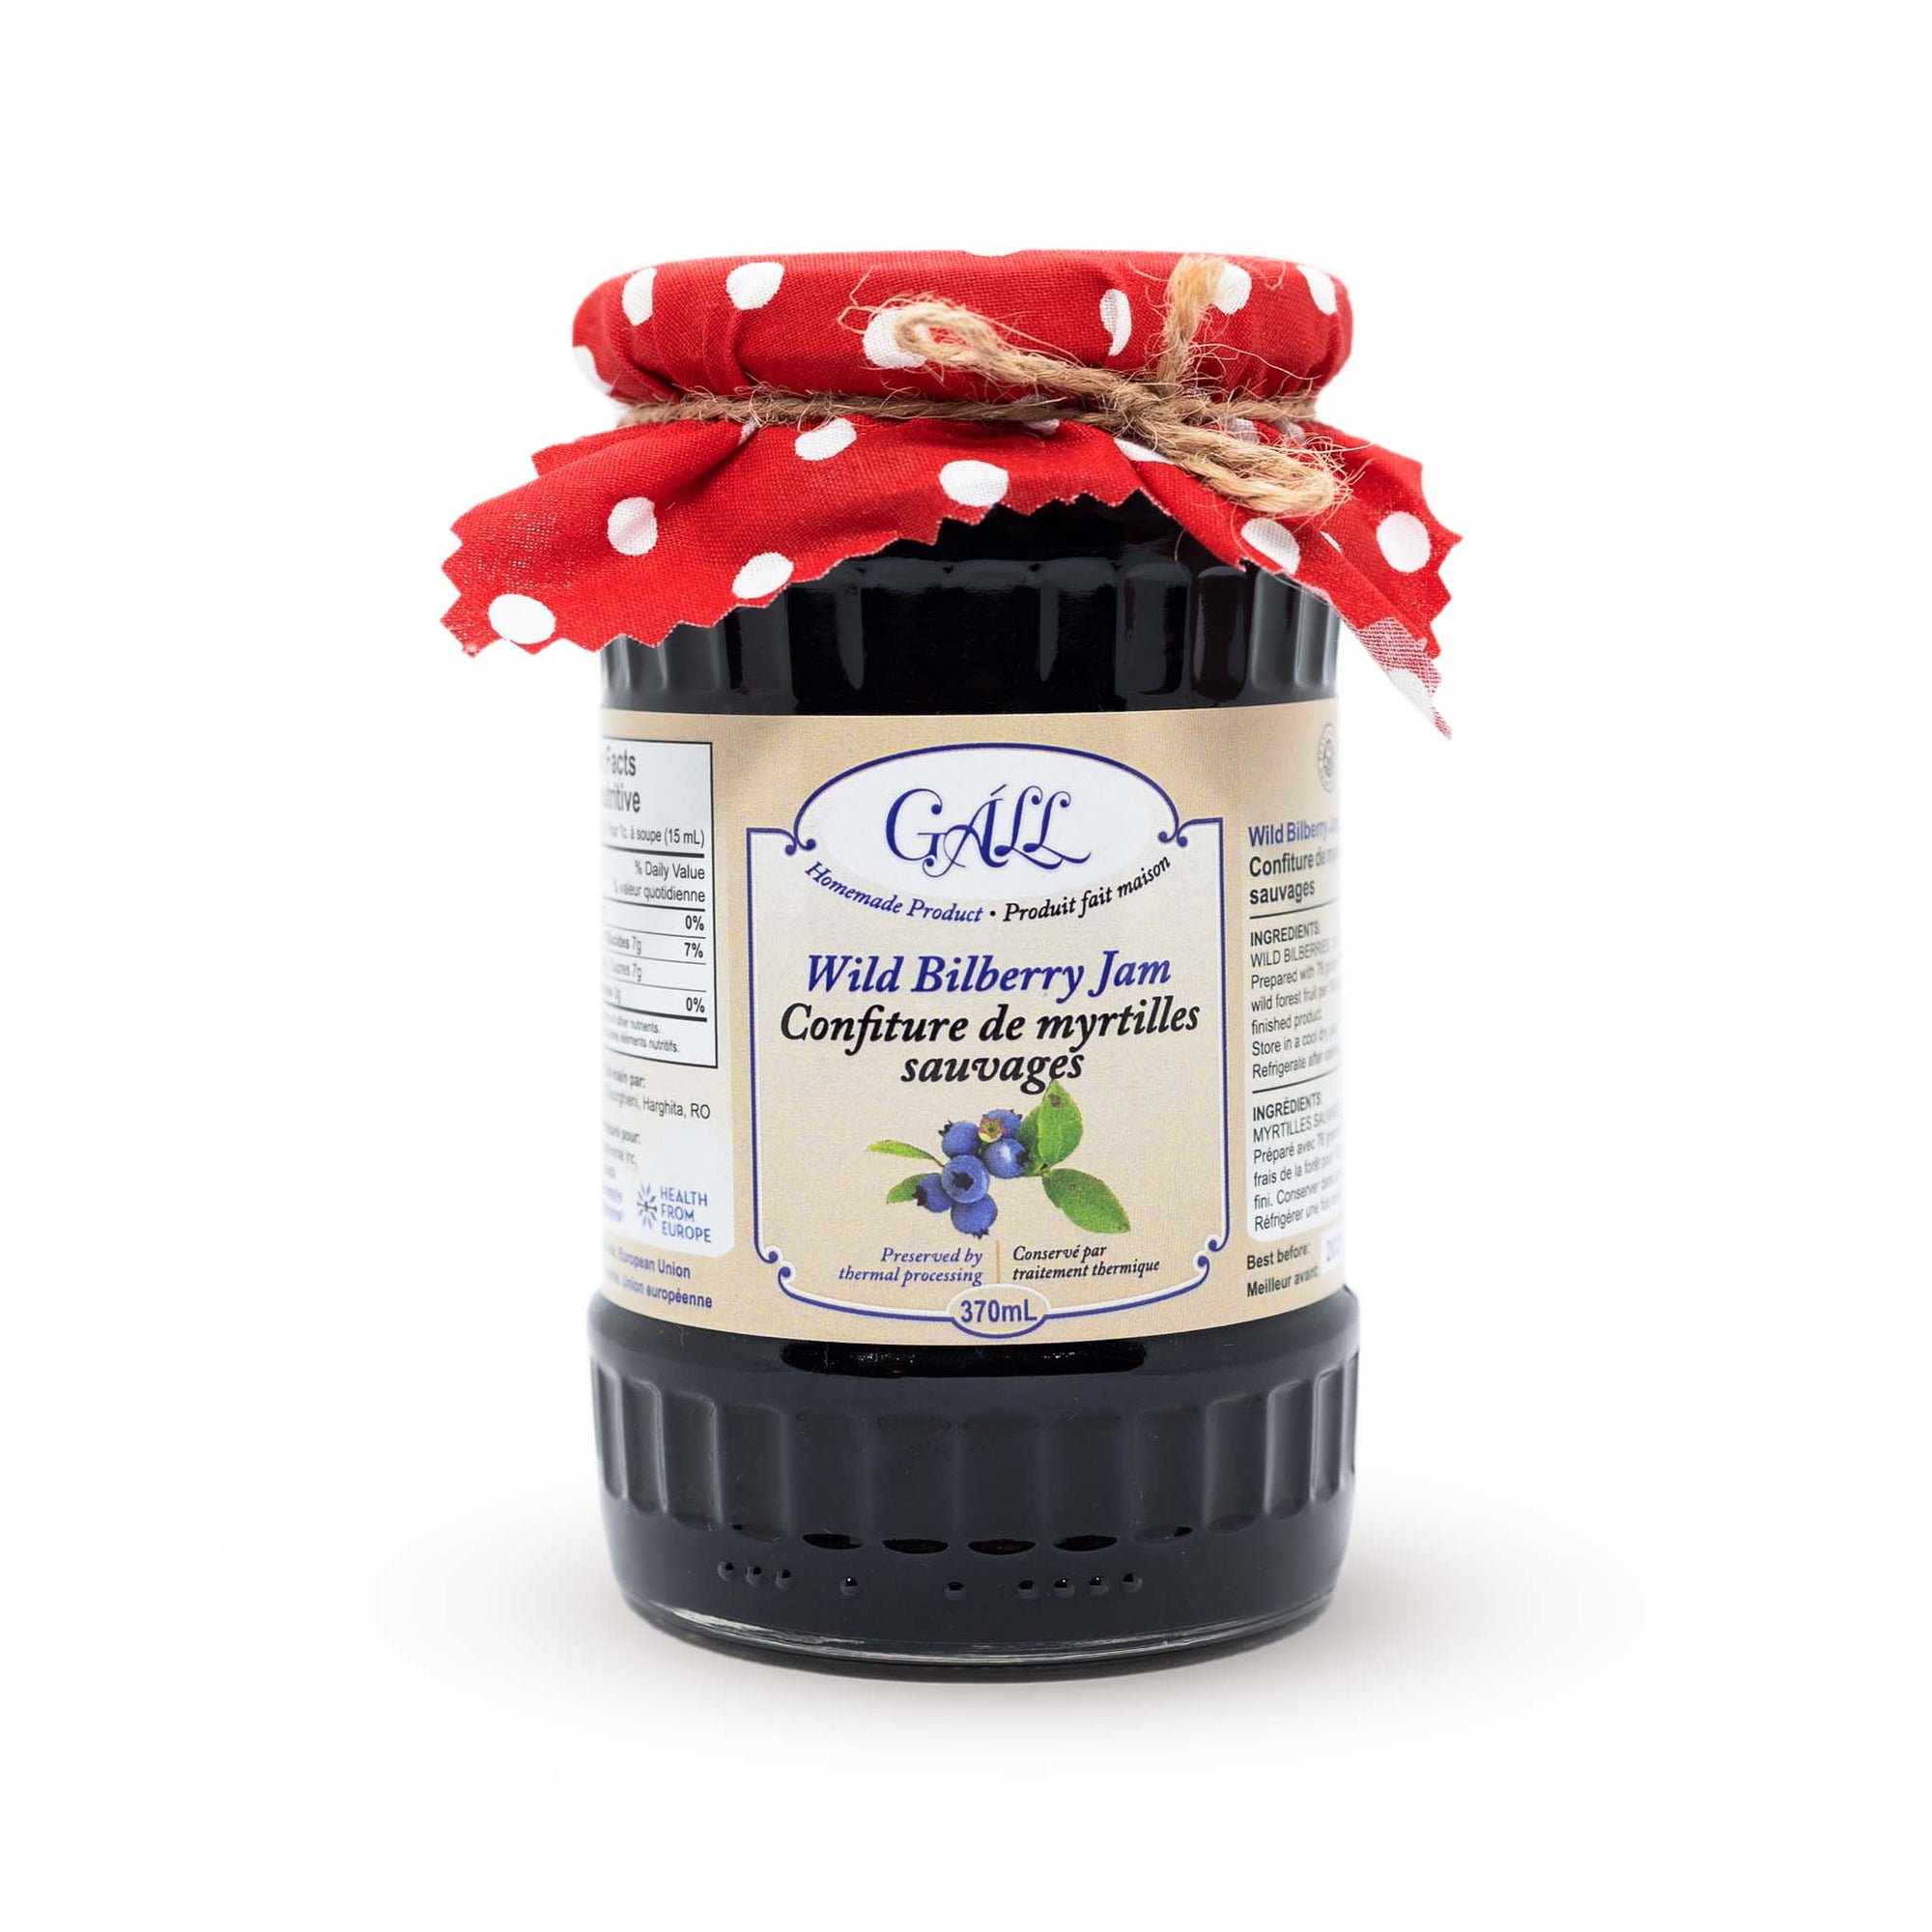 Artisanal Wild Bilberry Jam jar Health from Europe